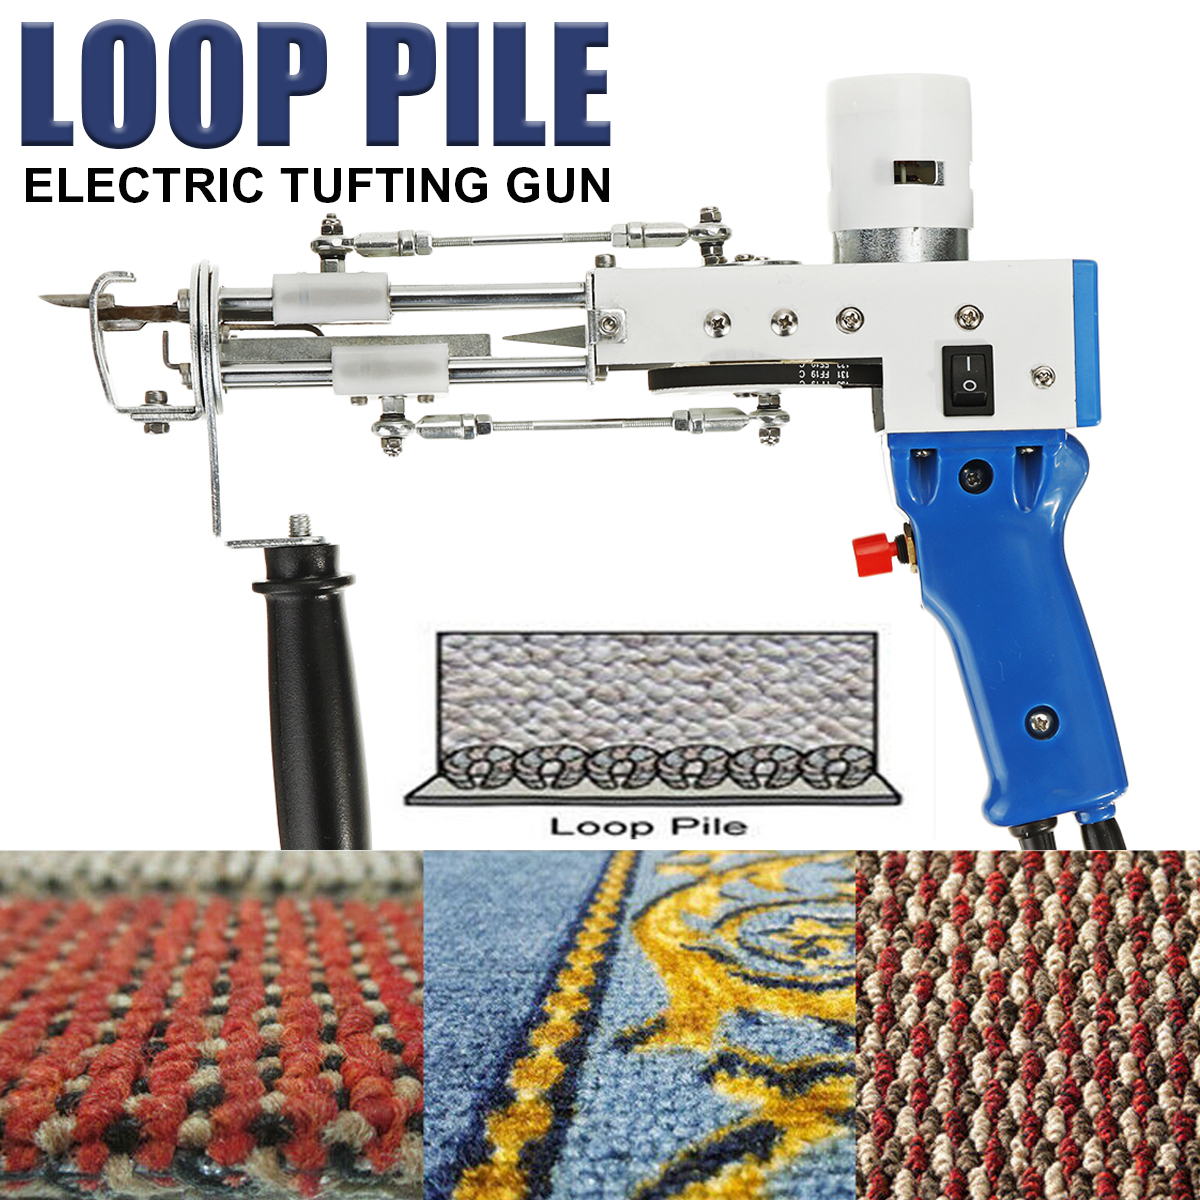 DIY-Cut-Pile-Tufting-Guns-Carpet-Weaving-Flocking-Machine-Set-Hand-Held-Electric-Punch-Needle-Looped-1879916-1